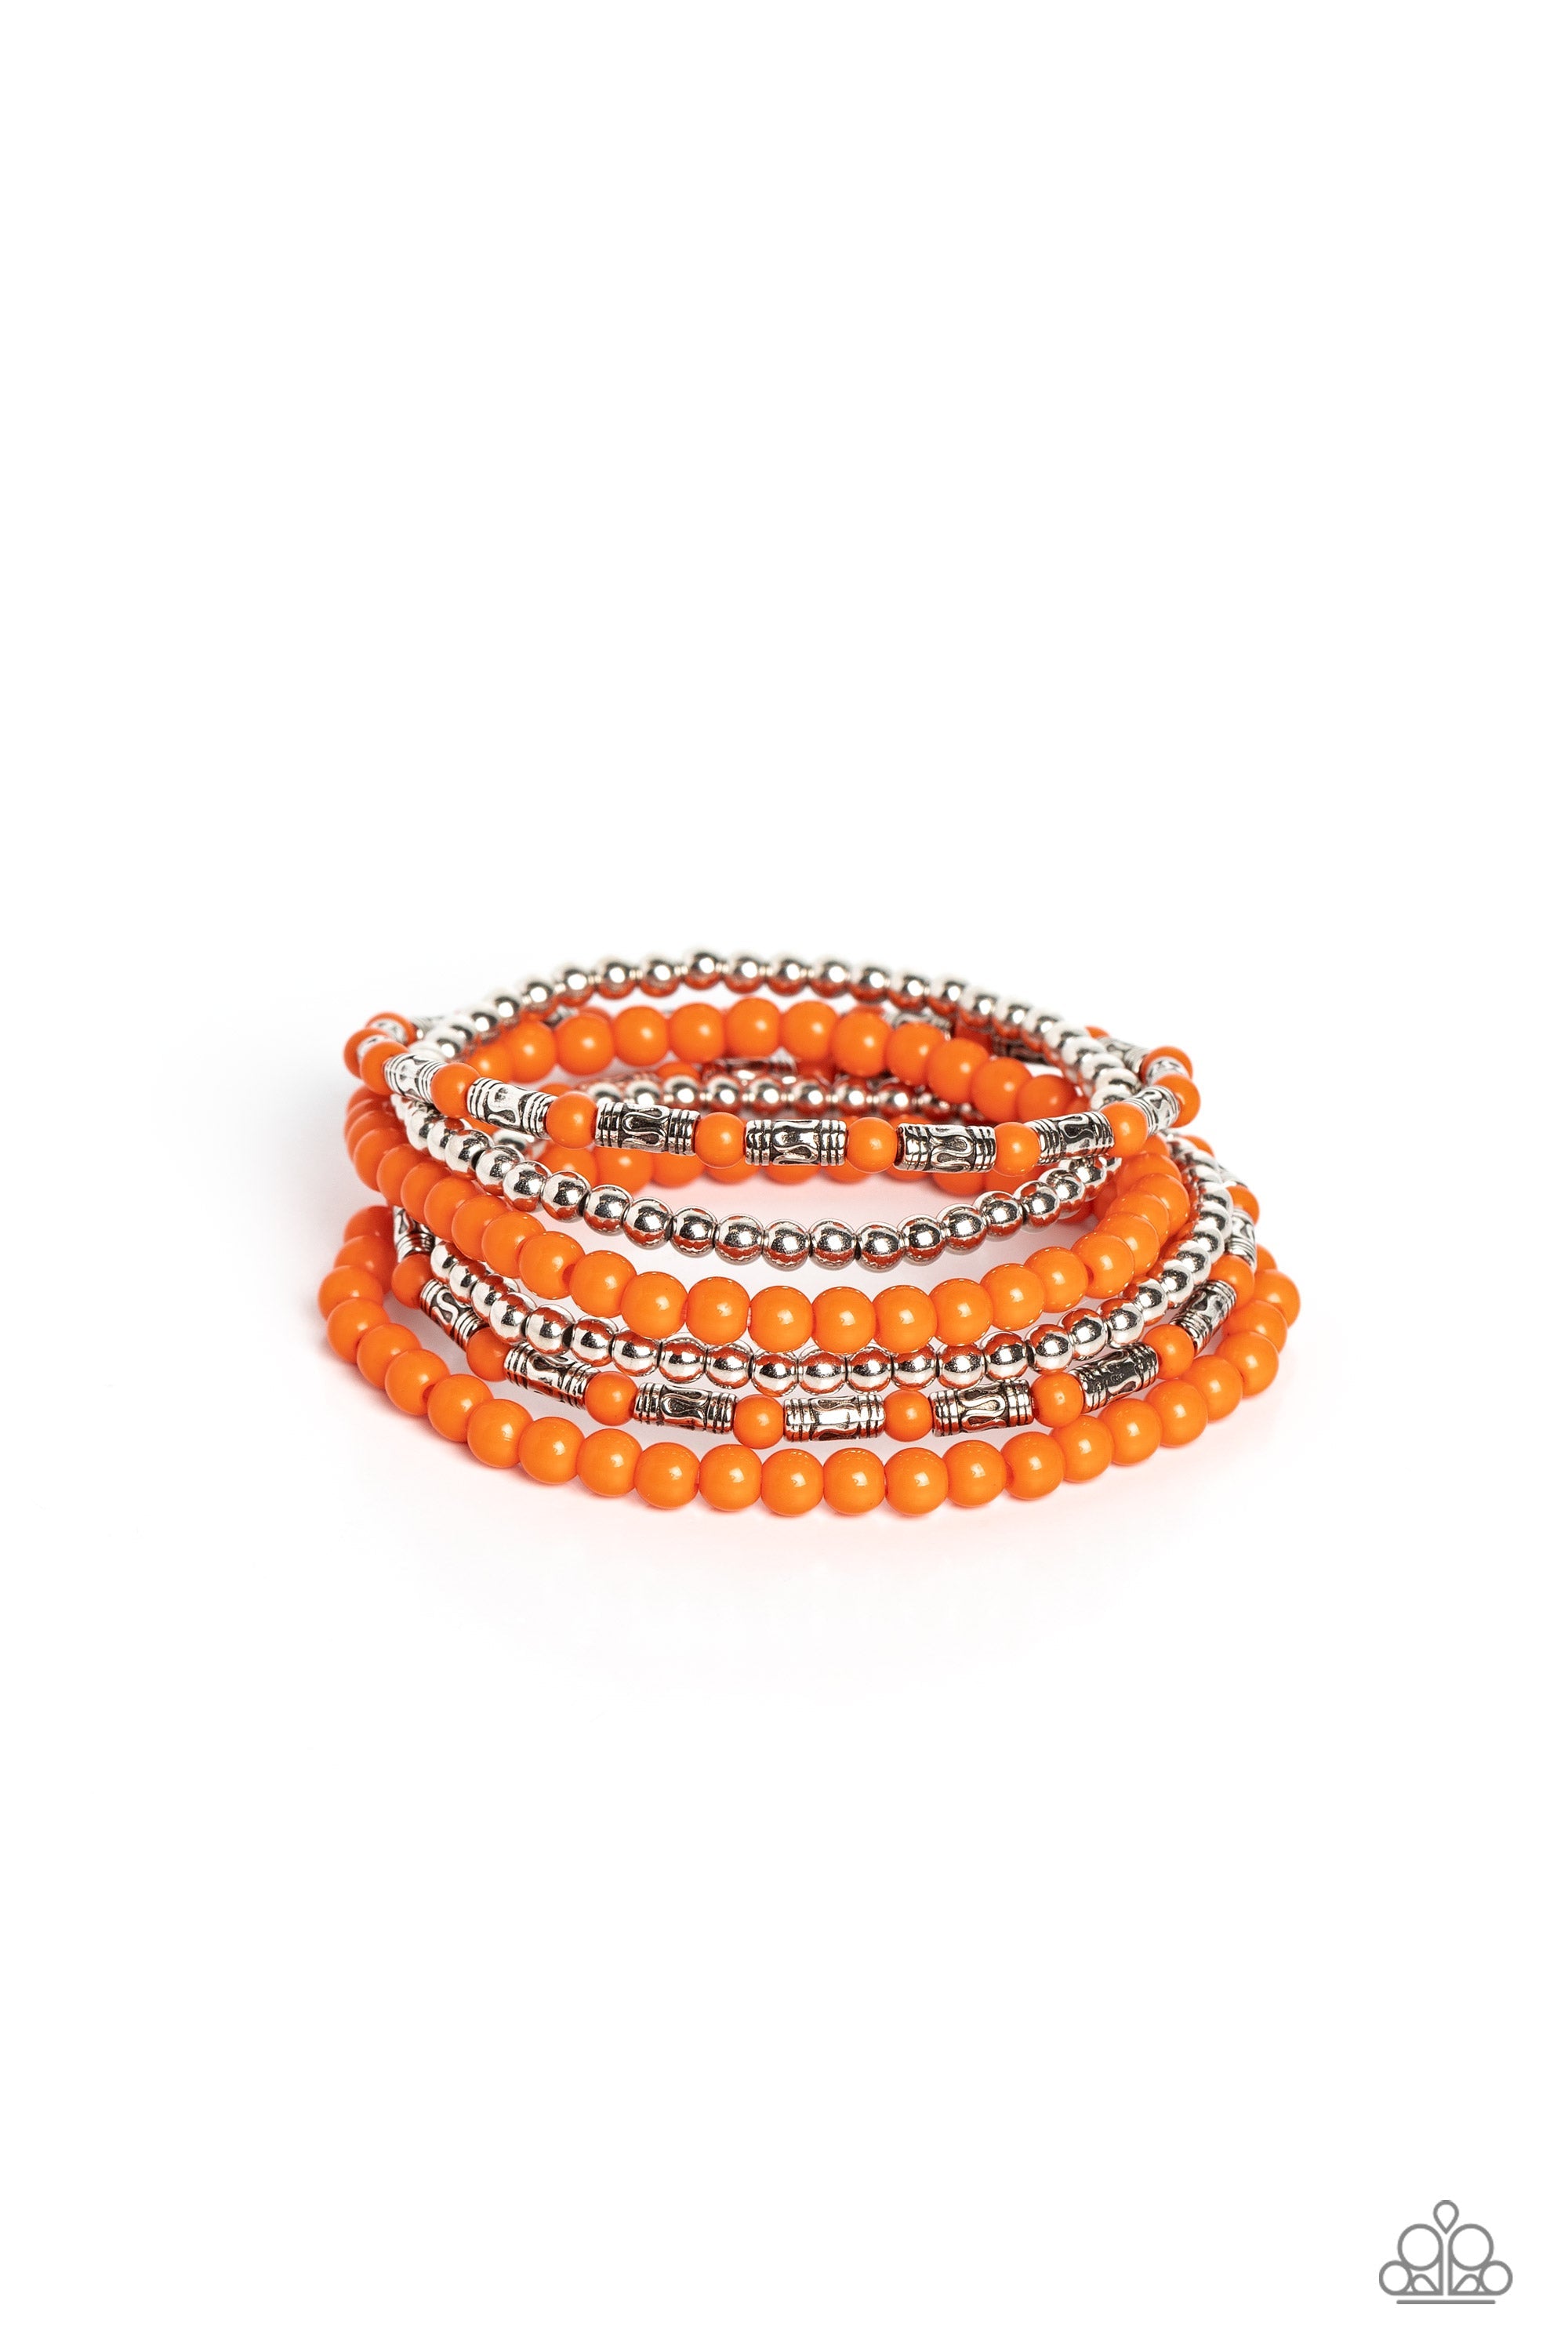 Mythical Magic Orange Bracelet - Paparazzi Accessories- lightbox - CarasShop.com - $5 Jewelry by Cara Jewels